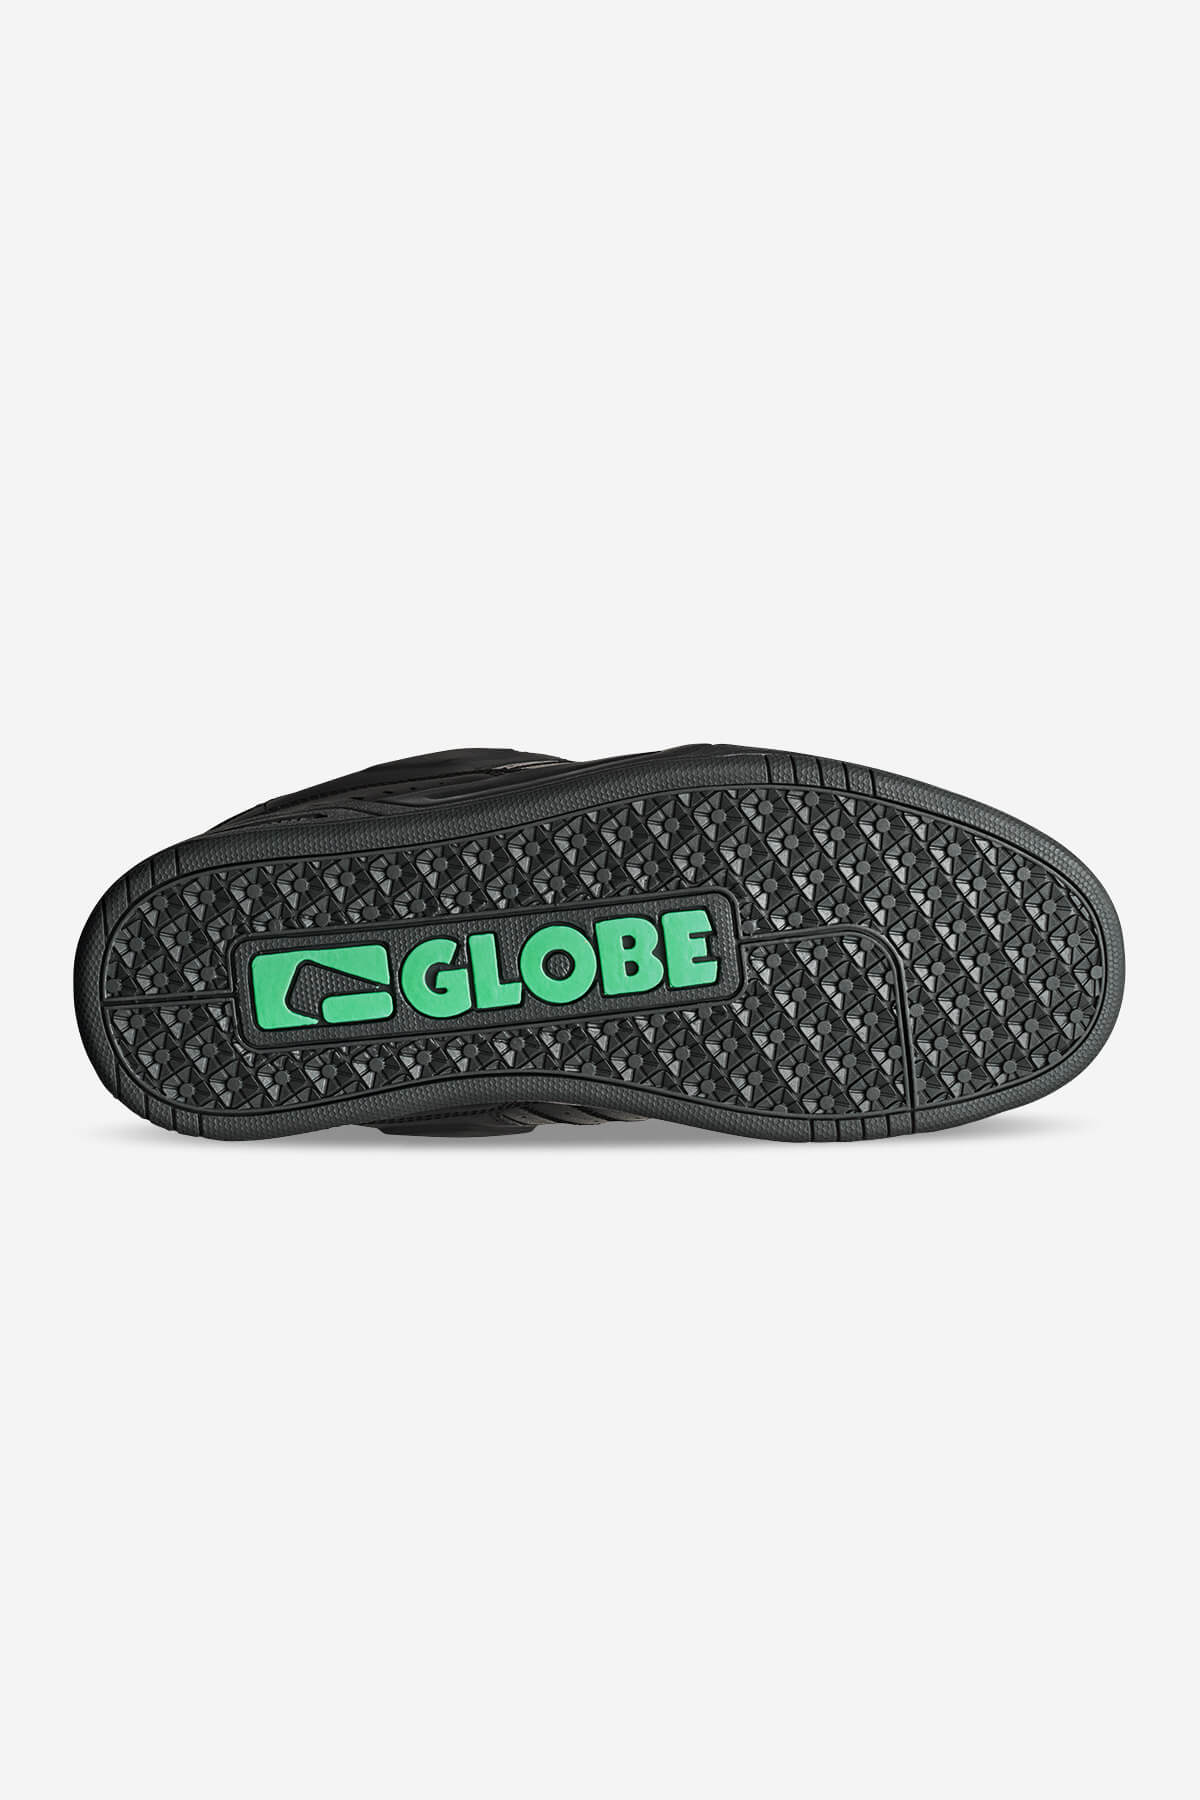 Globe - Fusion - Phantom Dip - skateboard Chaussures